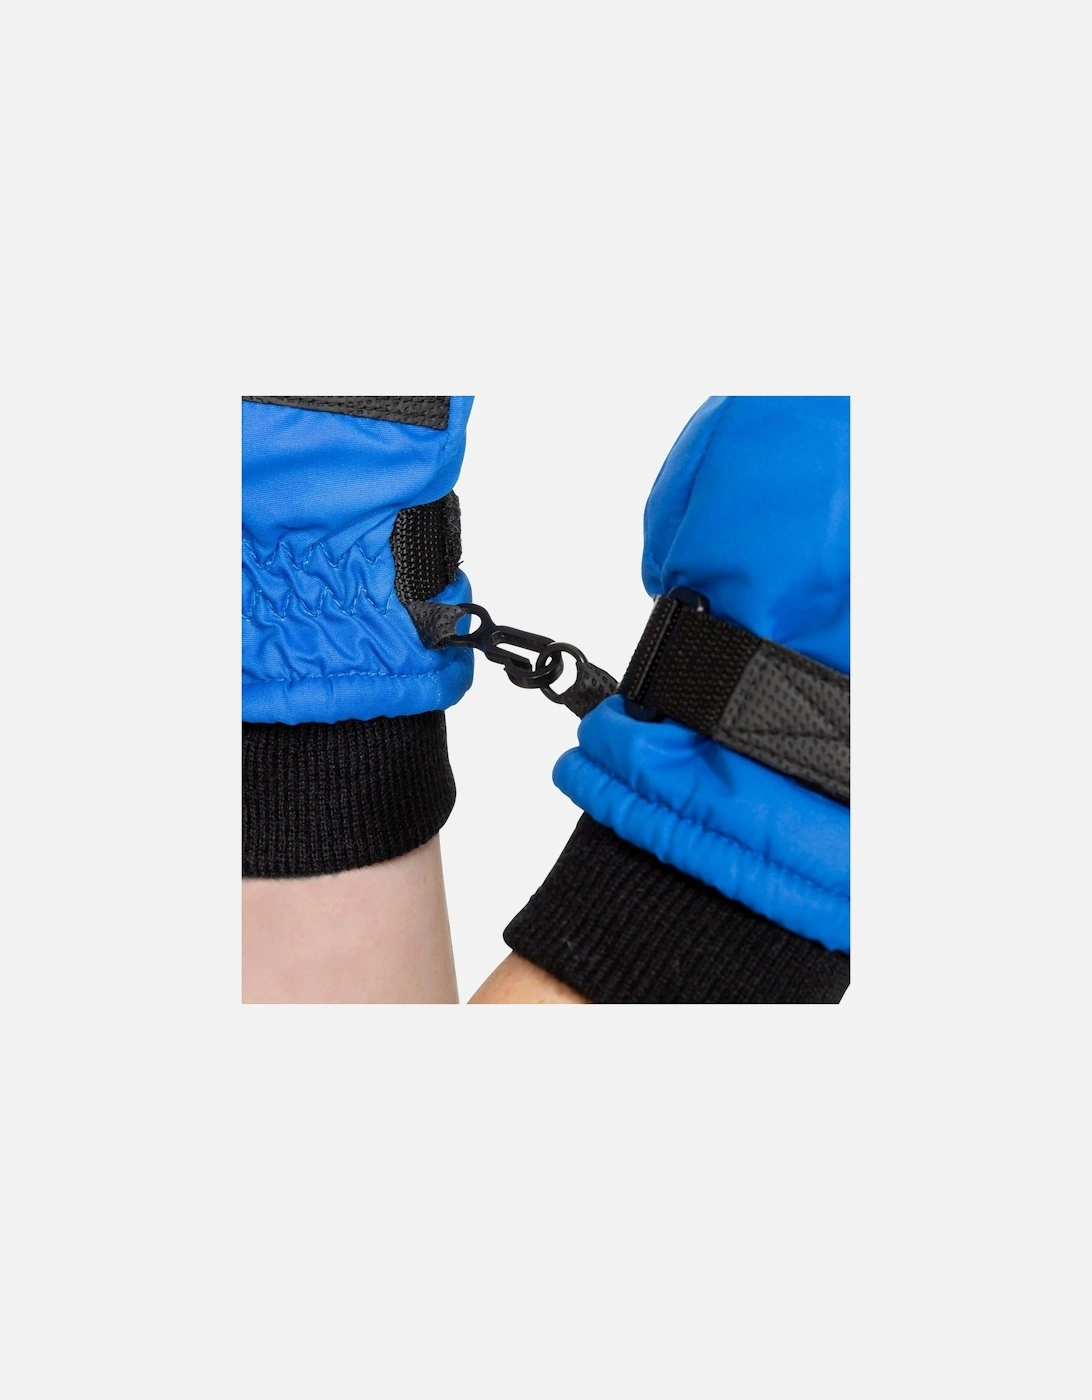 Childrens/Kids Ruri II Ski Gloves